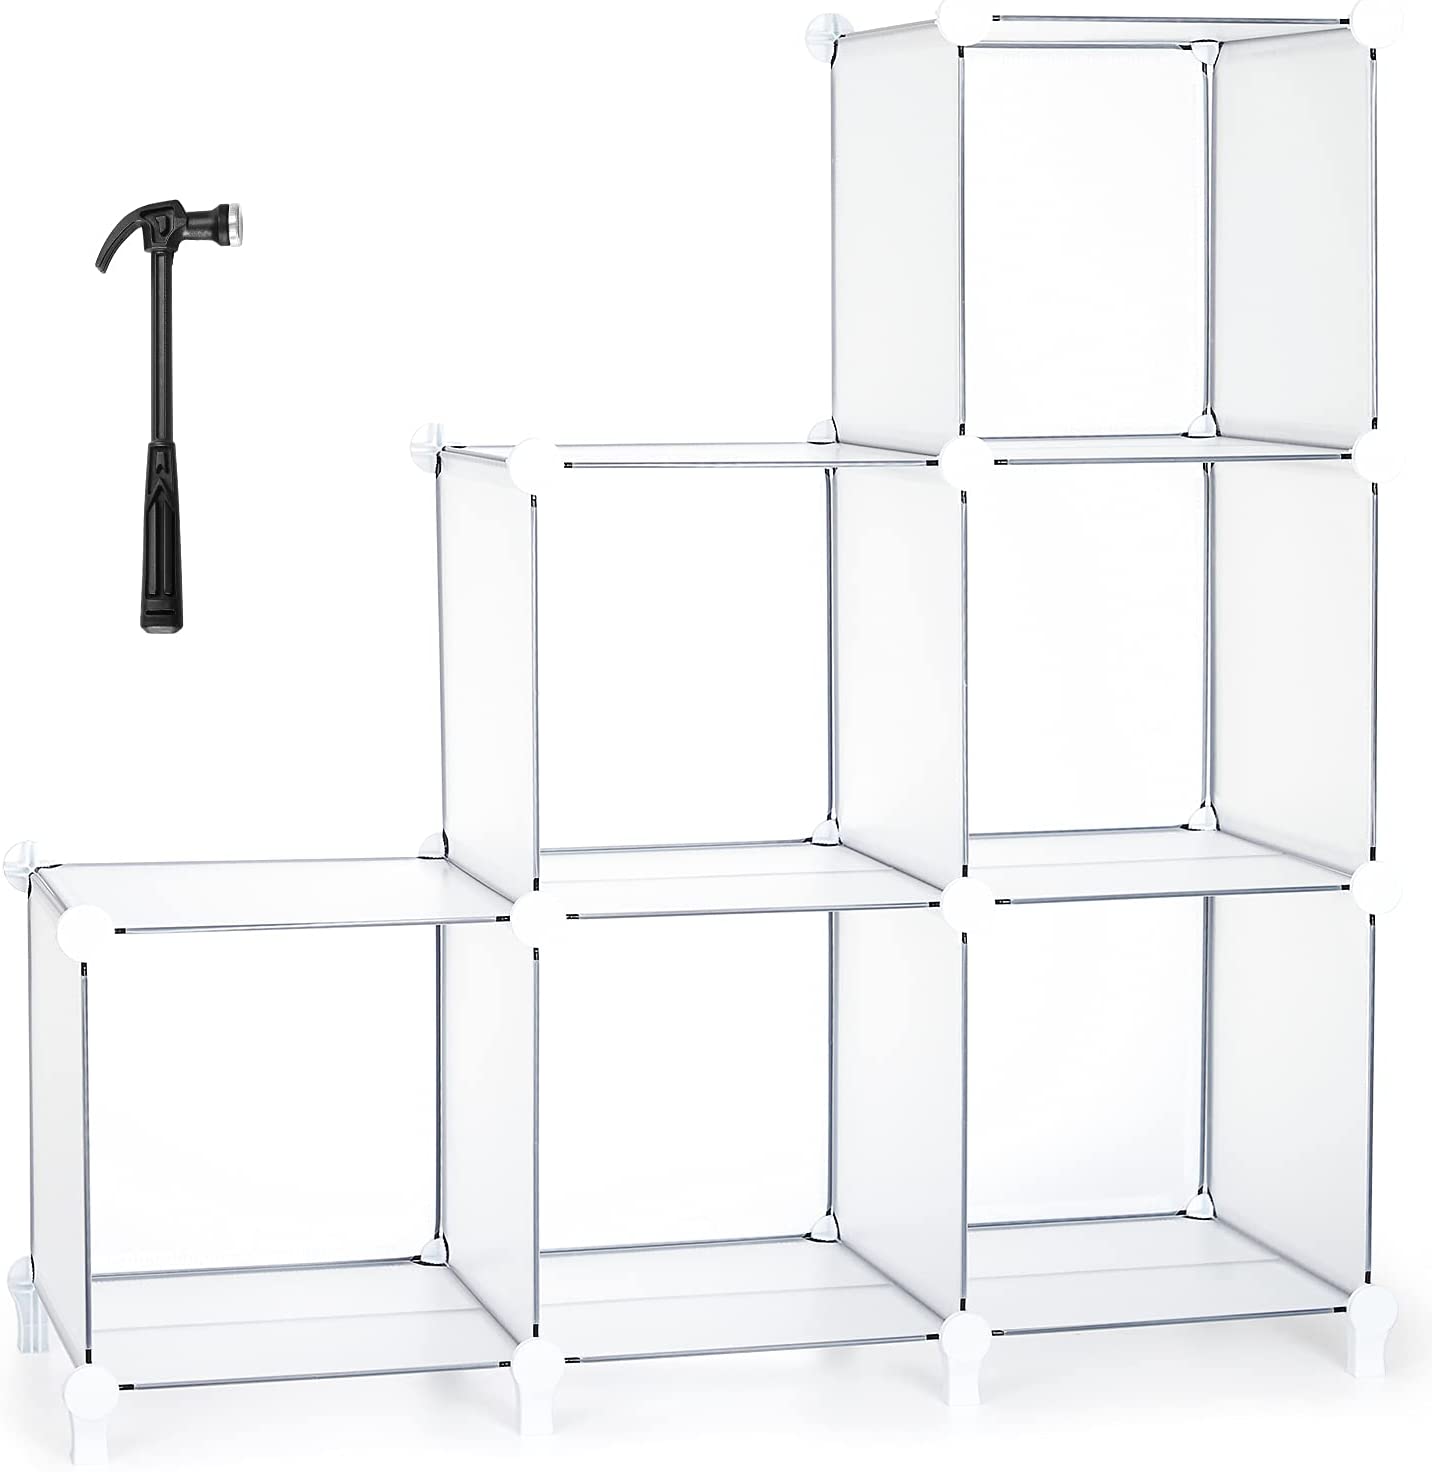 https://bigbigmart.com/wp-content/uploads/2021/10/Kootek-6-Cube-Storage-Organizer-Closet-Storage-Shelves-22lbs-White-Translucent-1.jpg